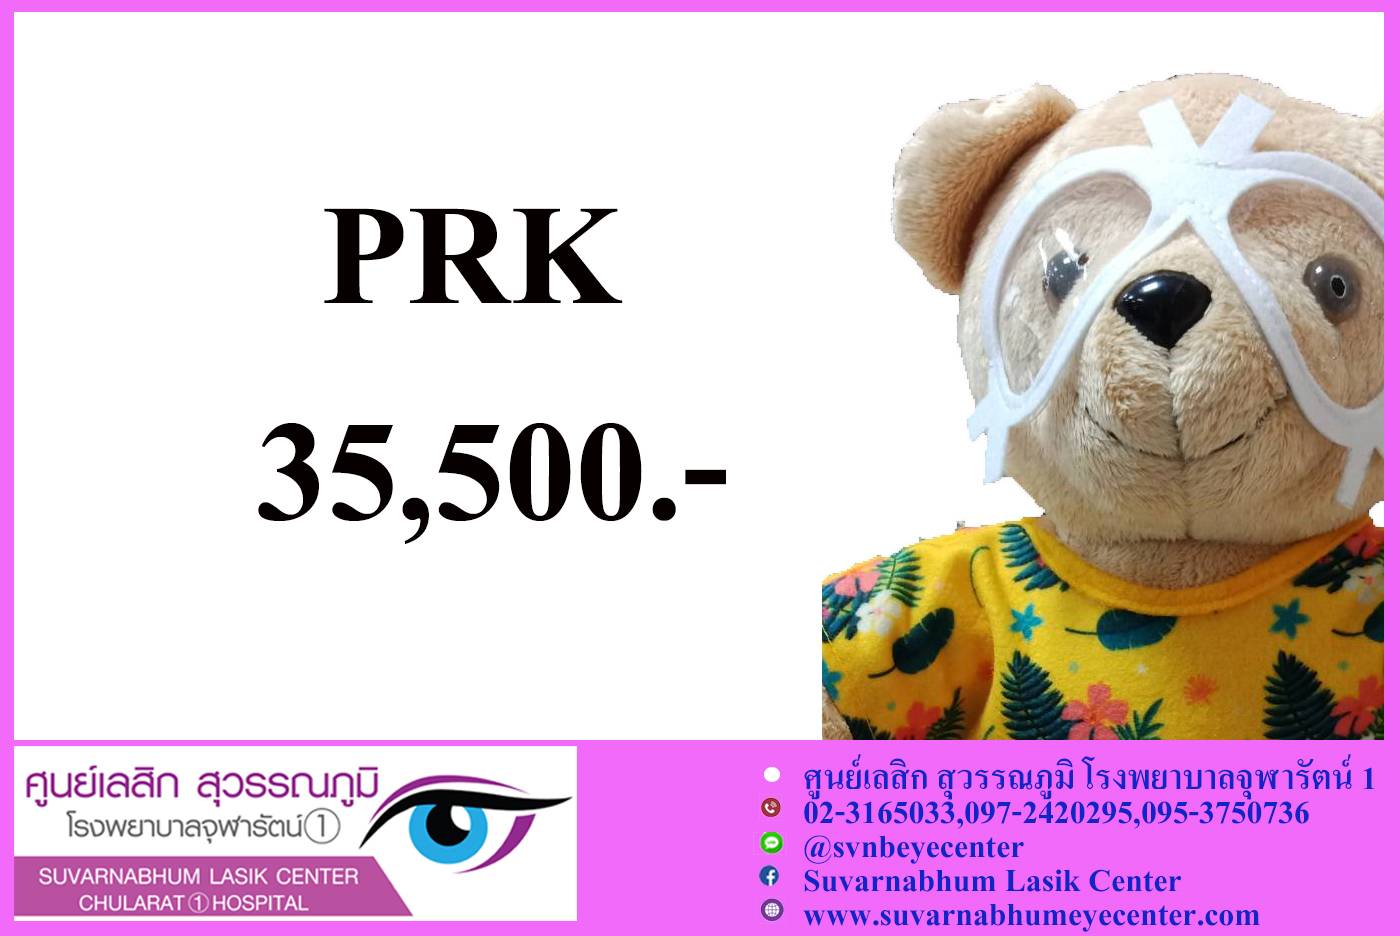 PRK ราคาประหยัด 35,500 บาท Net Price